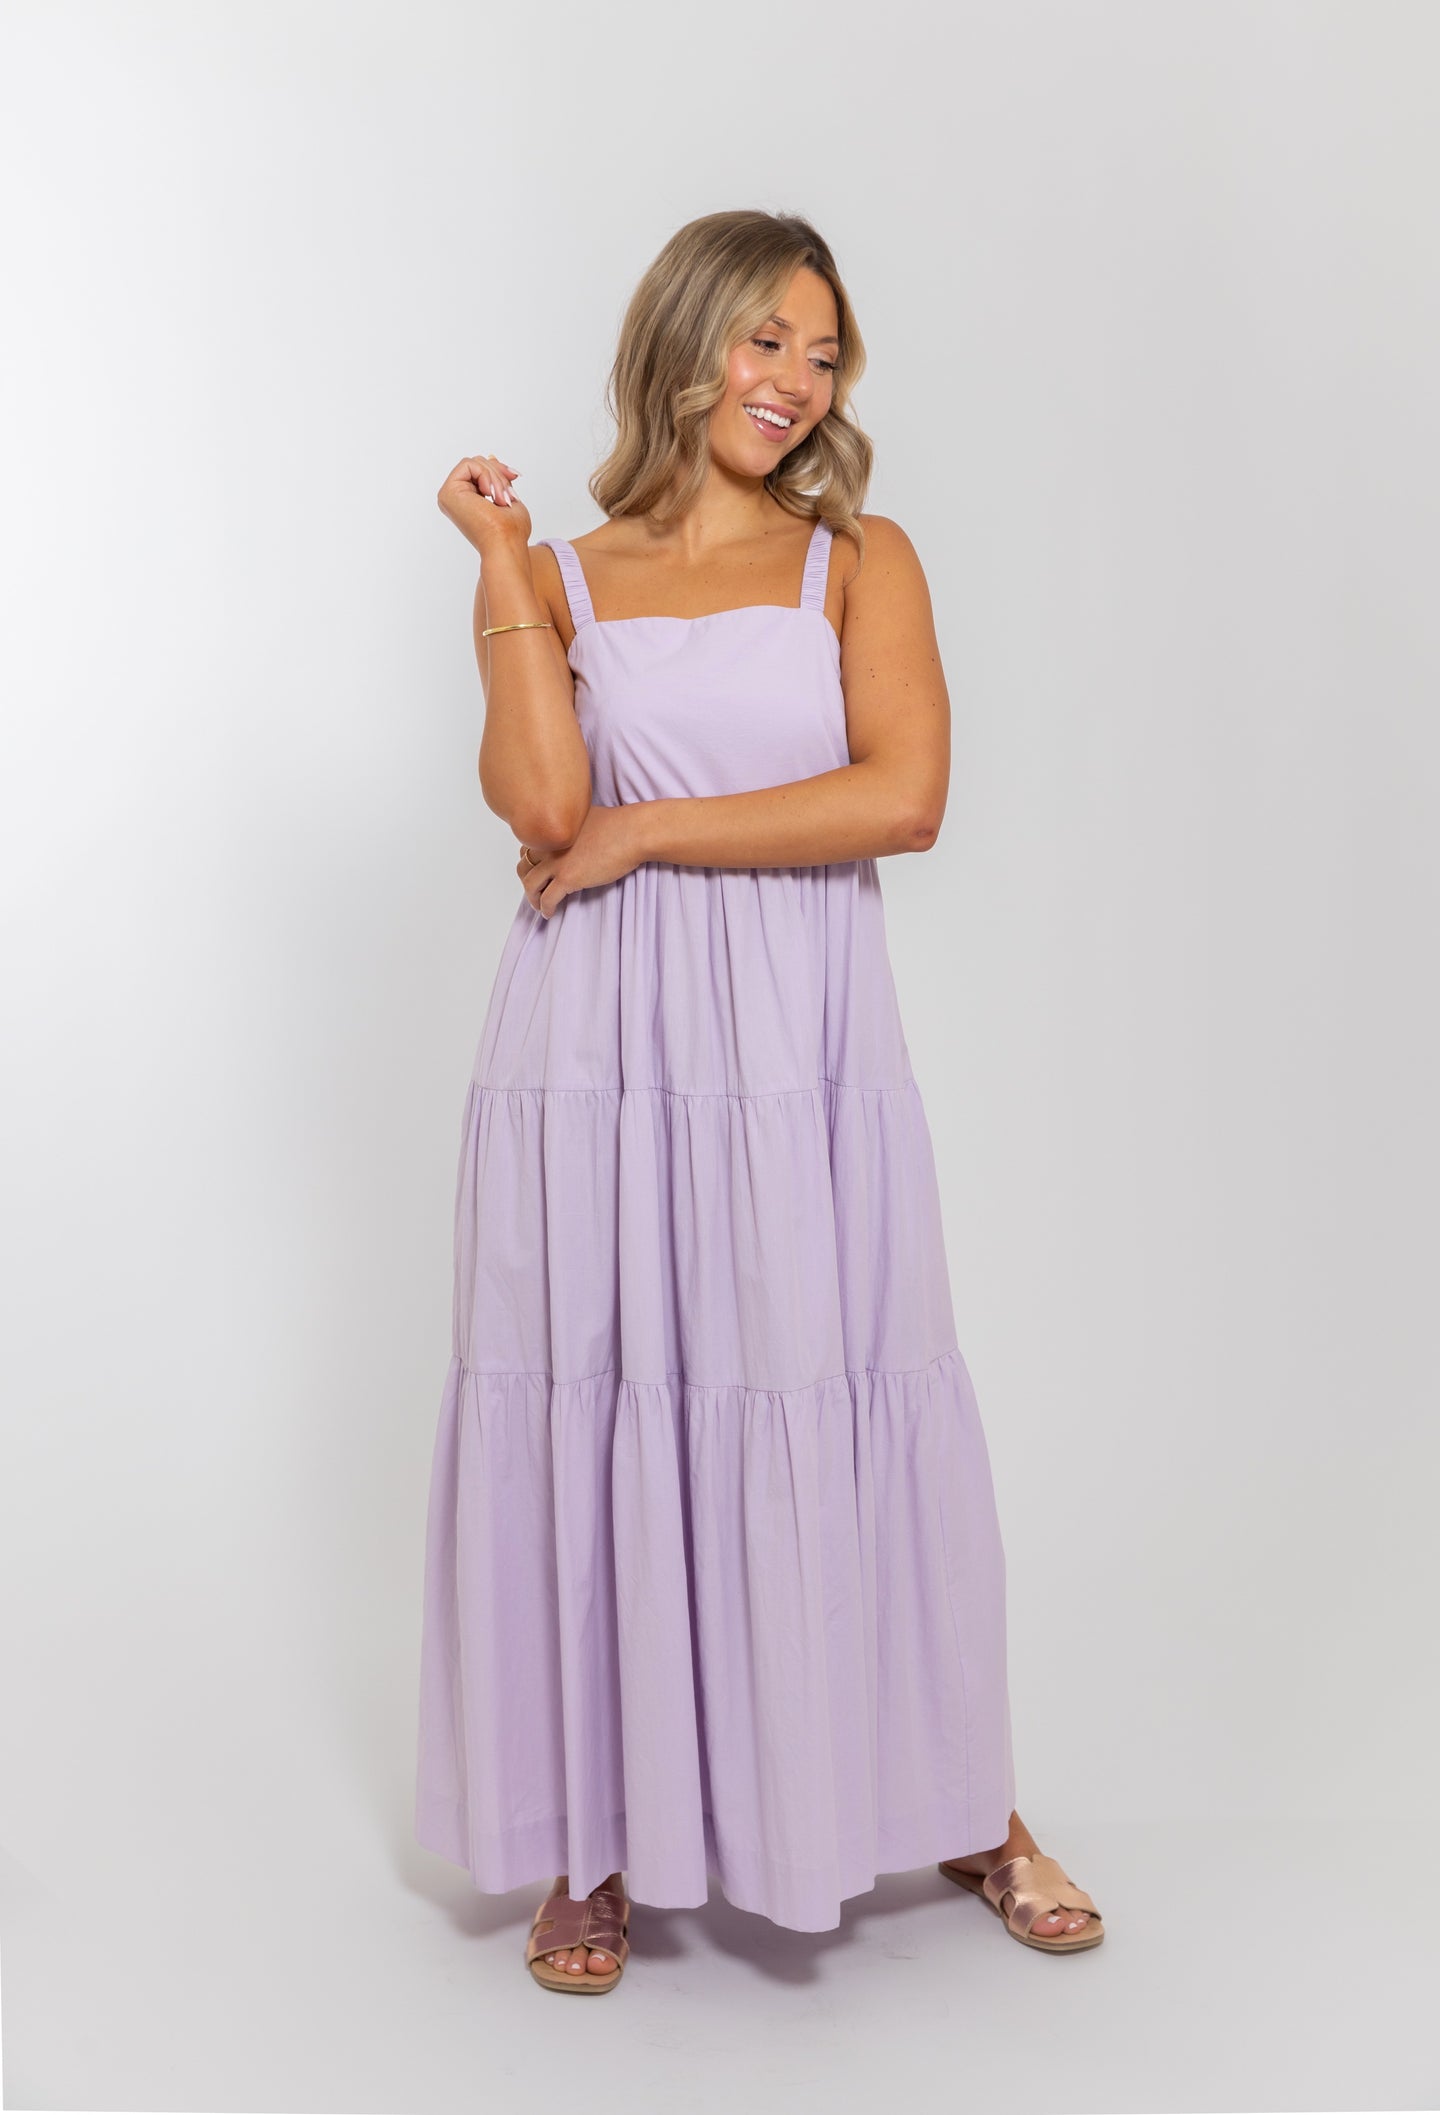 The Leland Lilac Dress